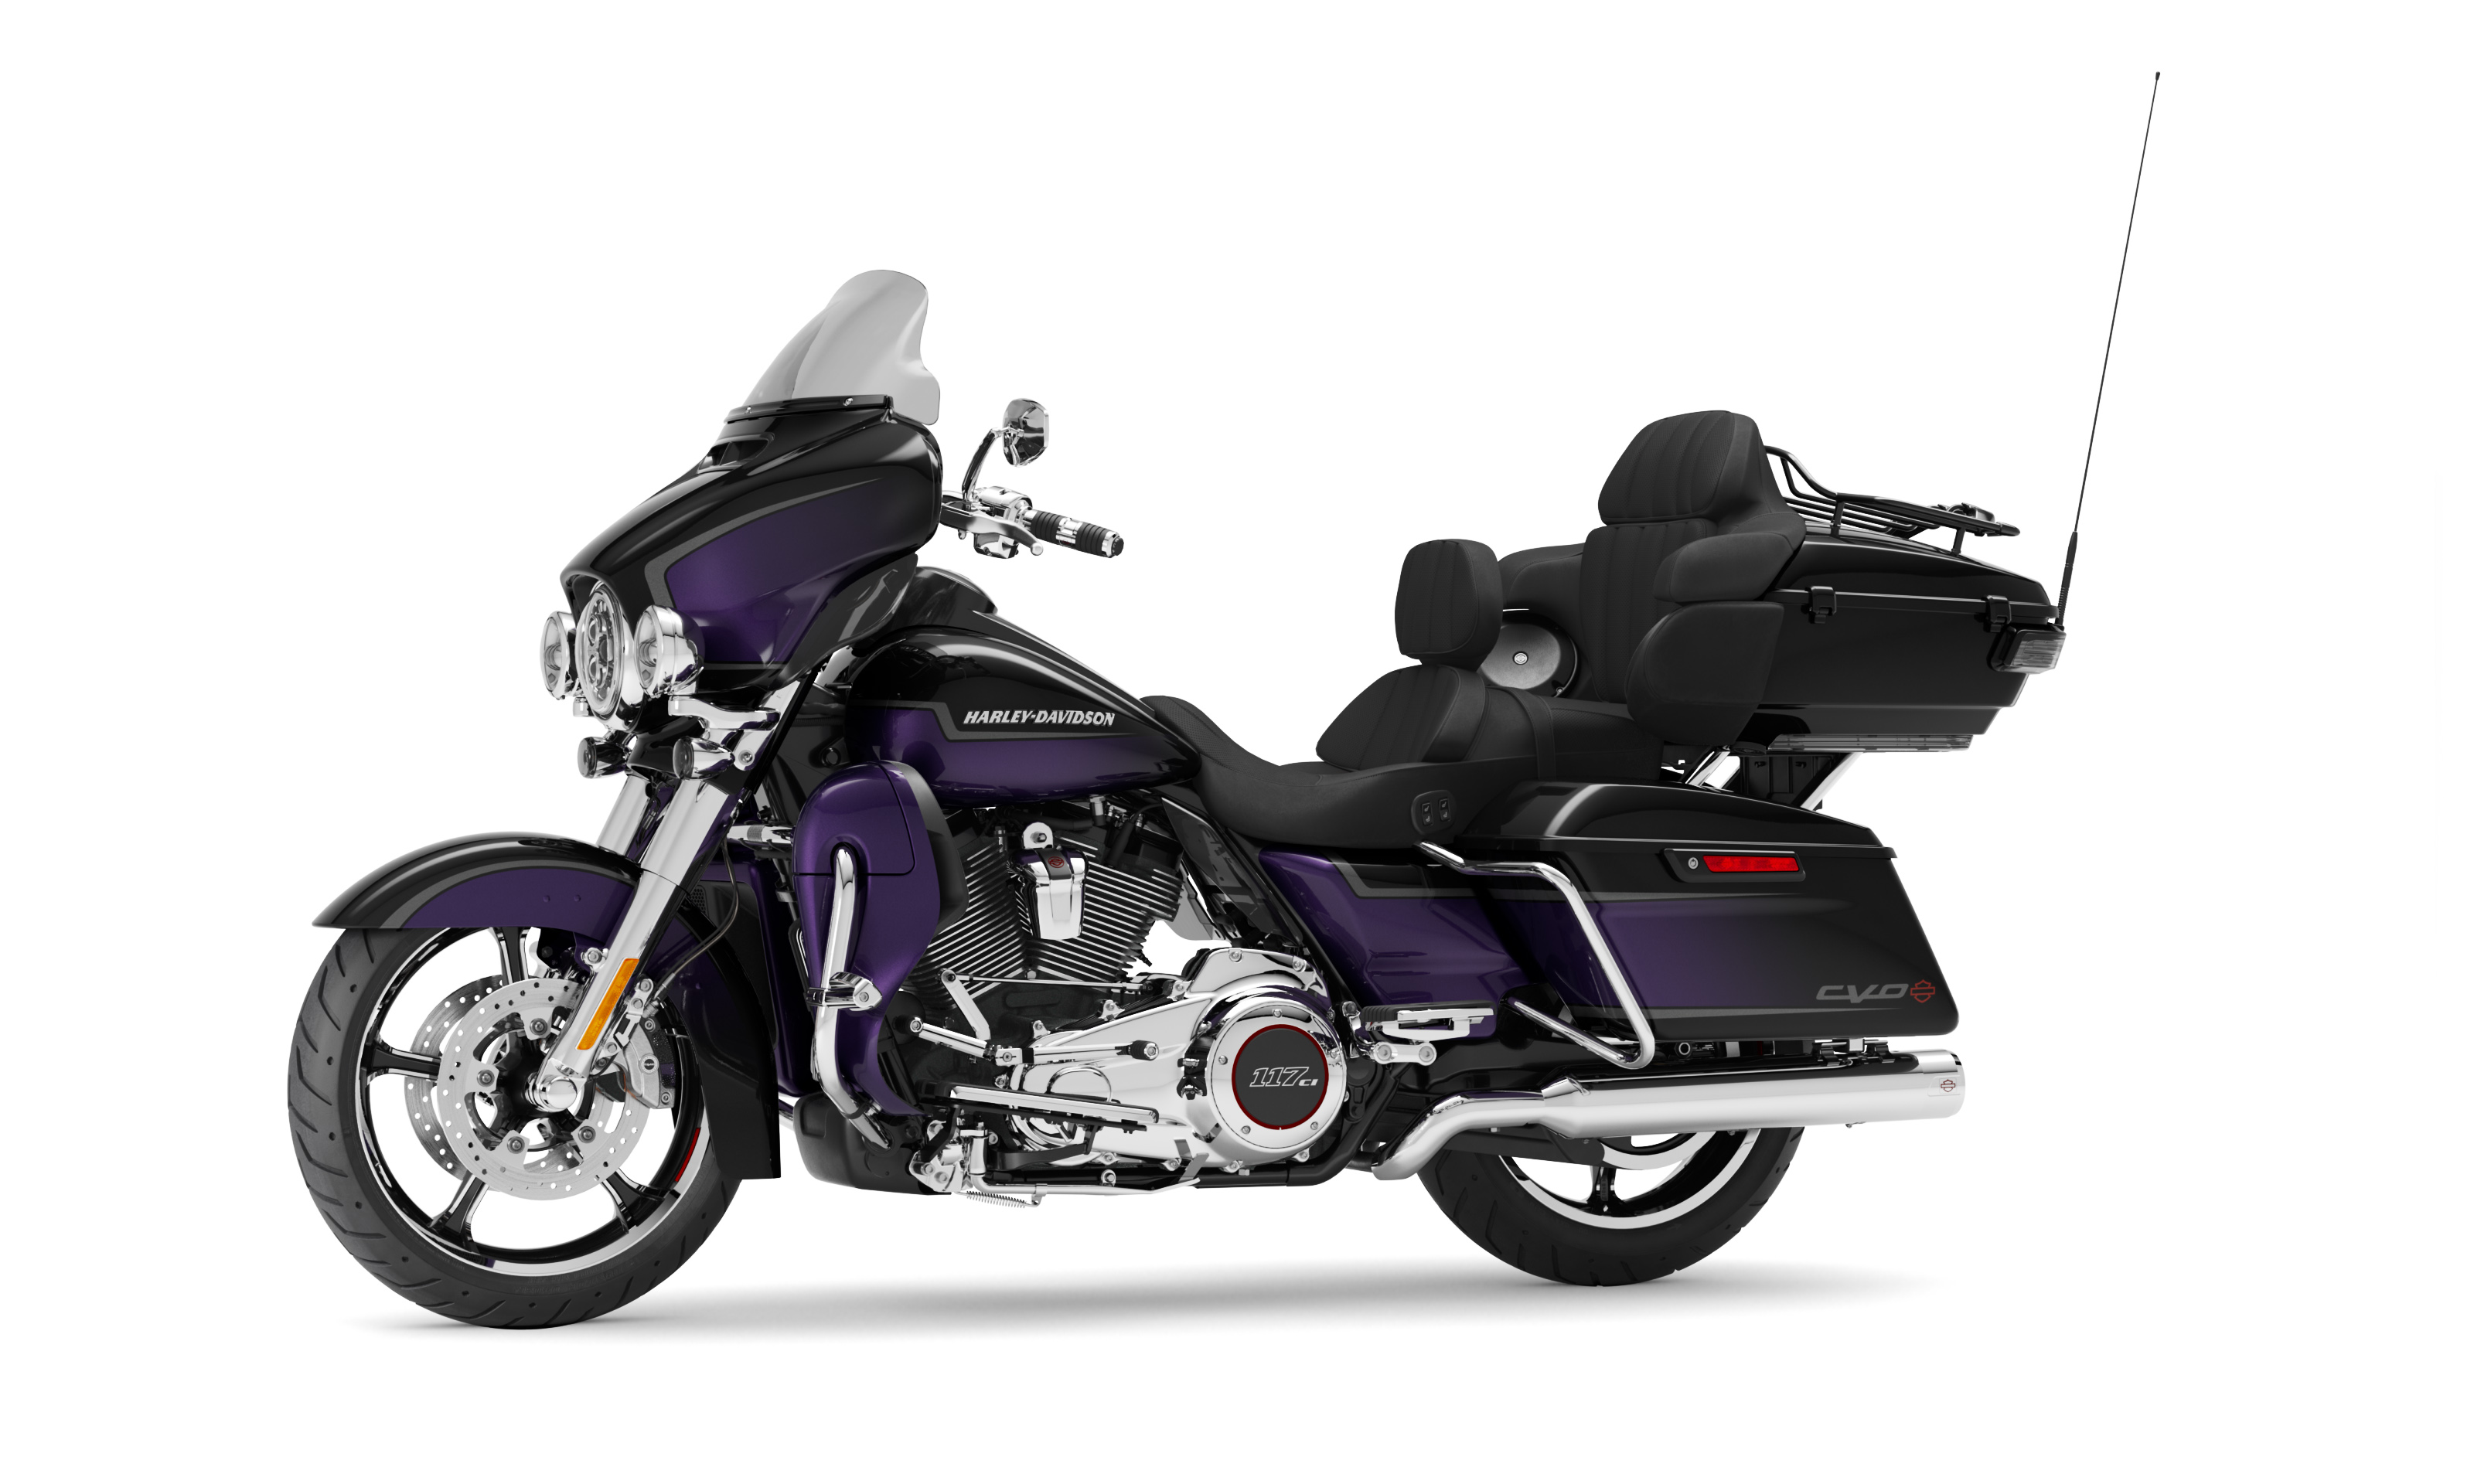 Harley Davidson Limited Edition Cvo 2020 Price Promotion Off60